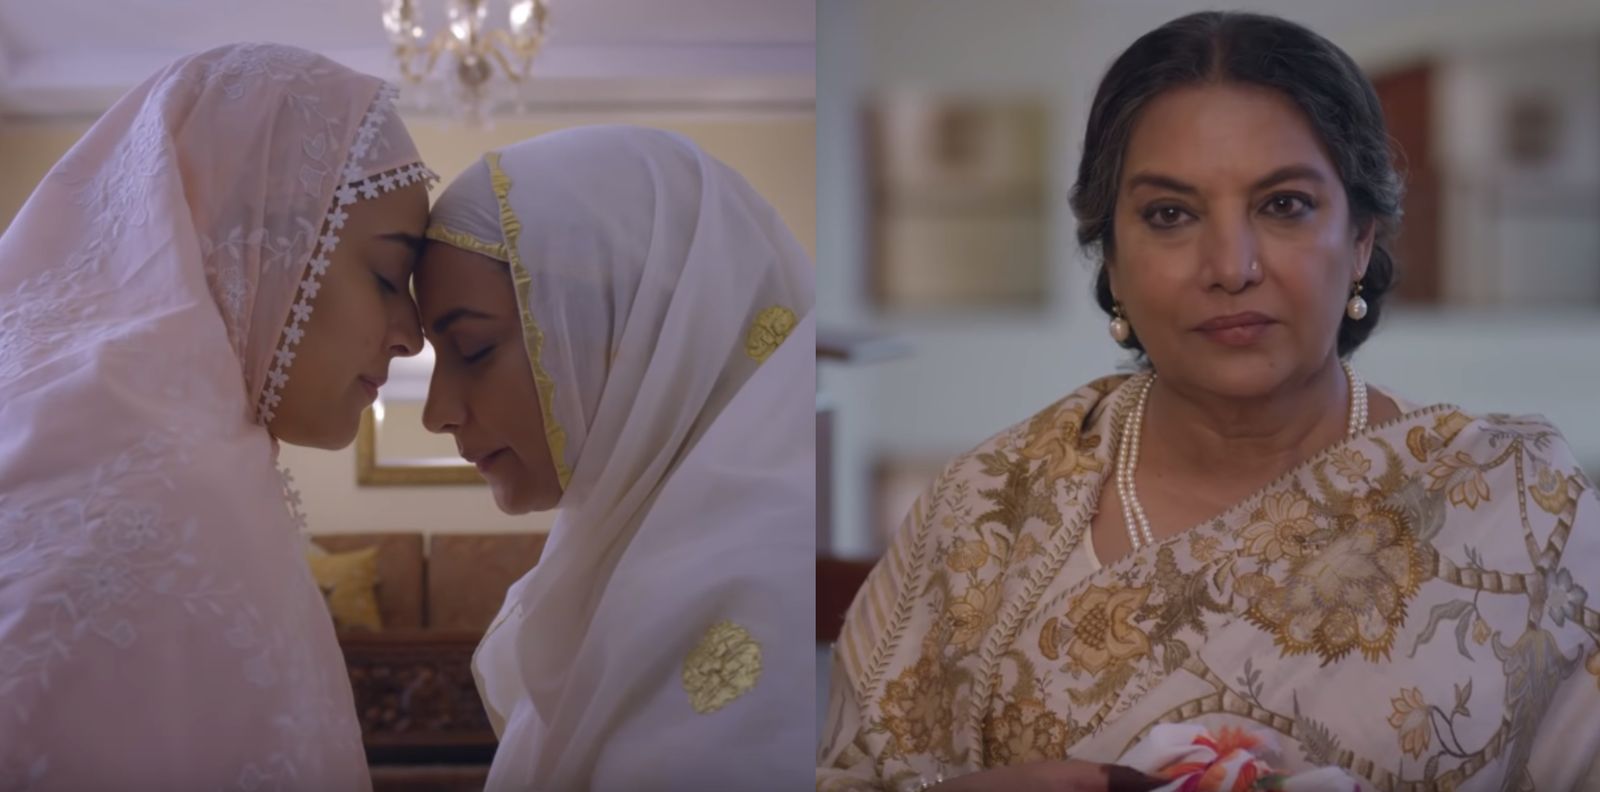 Sheer Qorma Trailer: This LGBTQ FIlm Starring Swara Bhaskar And Divya Dutta Wants Us To Accept Love In Every Form